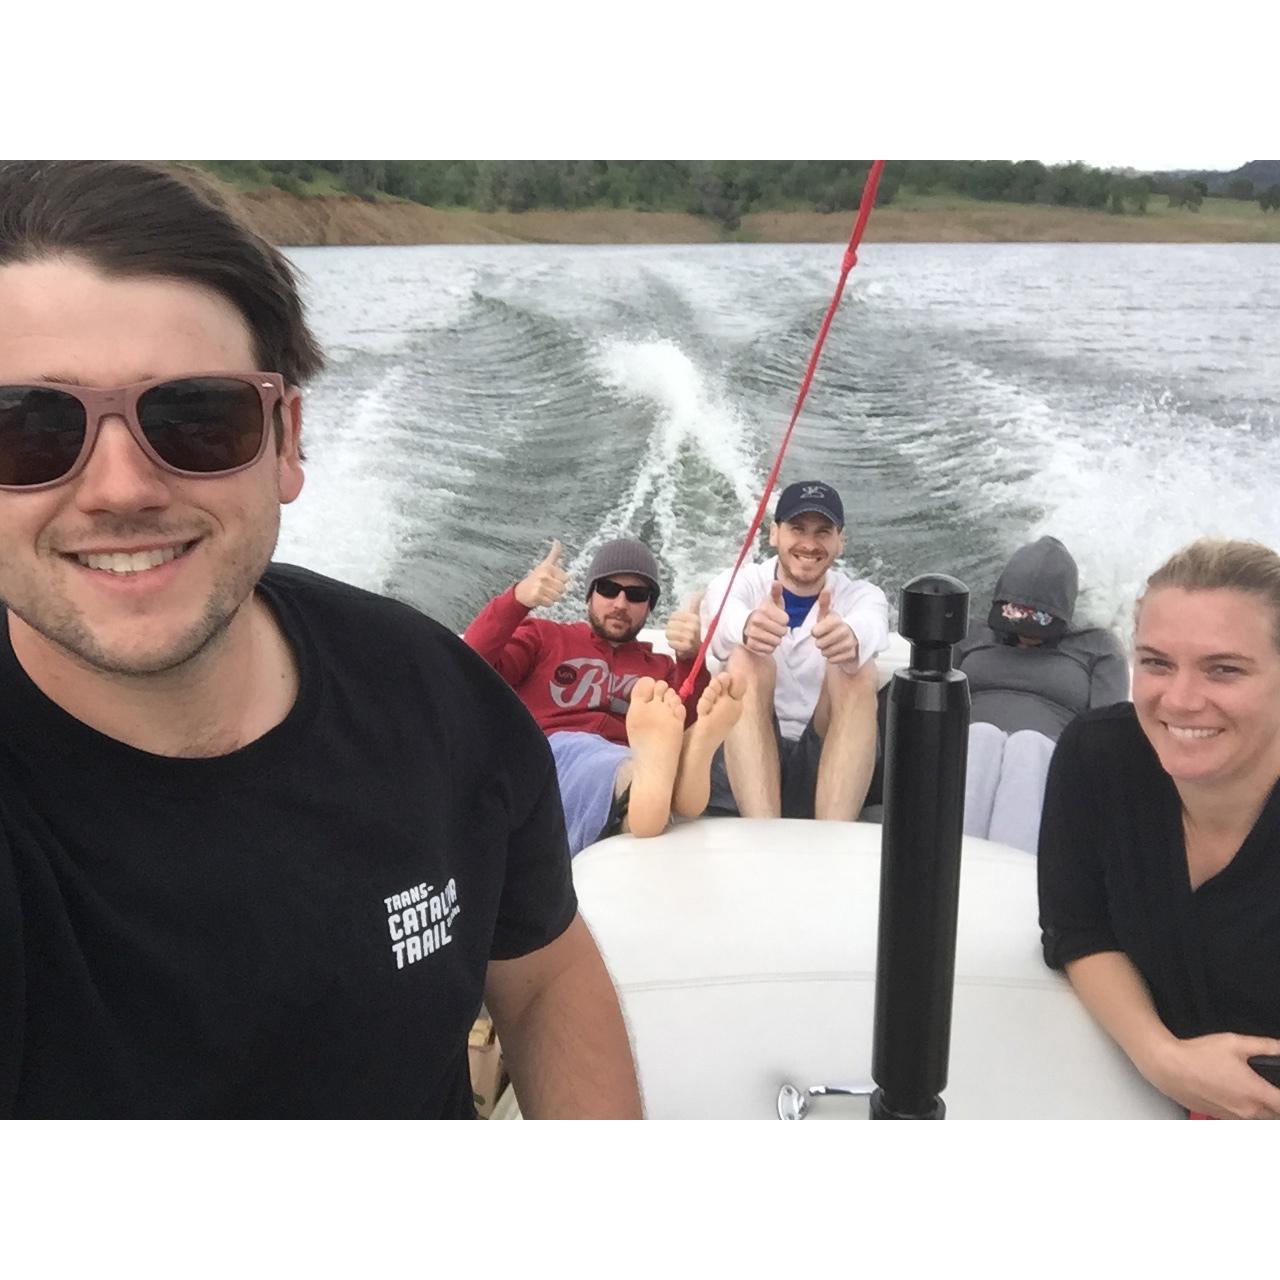 Enjoying some boat time at Folsom Lake. 
Perry, Dave, Jason, Jenn (Bundled), Stephanie.